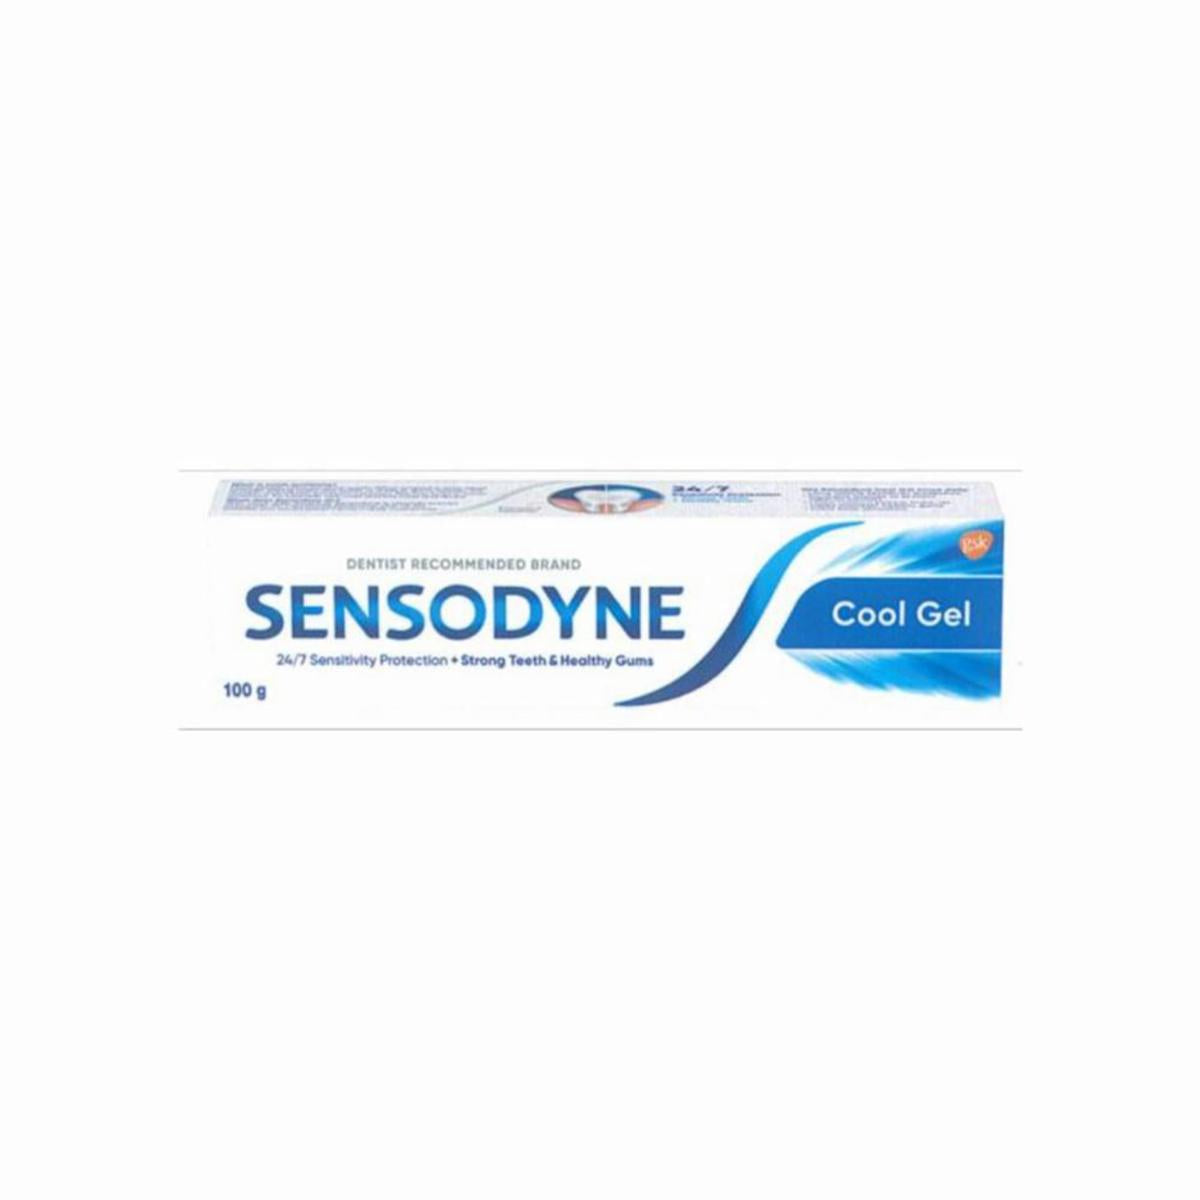 Sensodyne Cool Get Toothpaste 100g